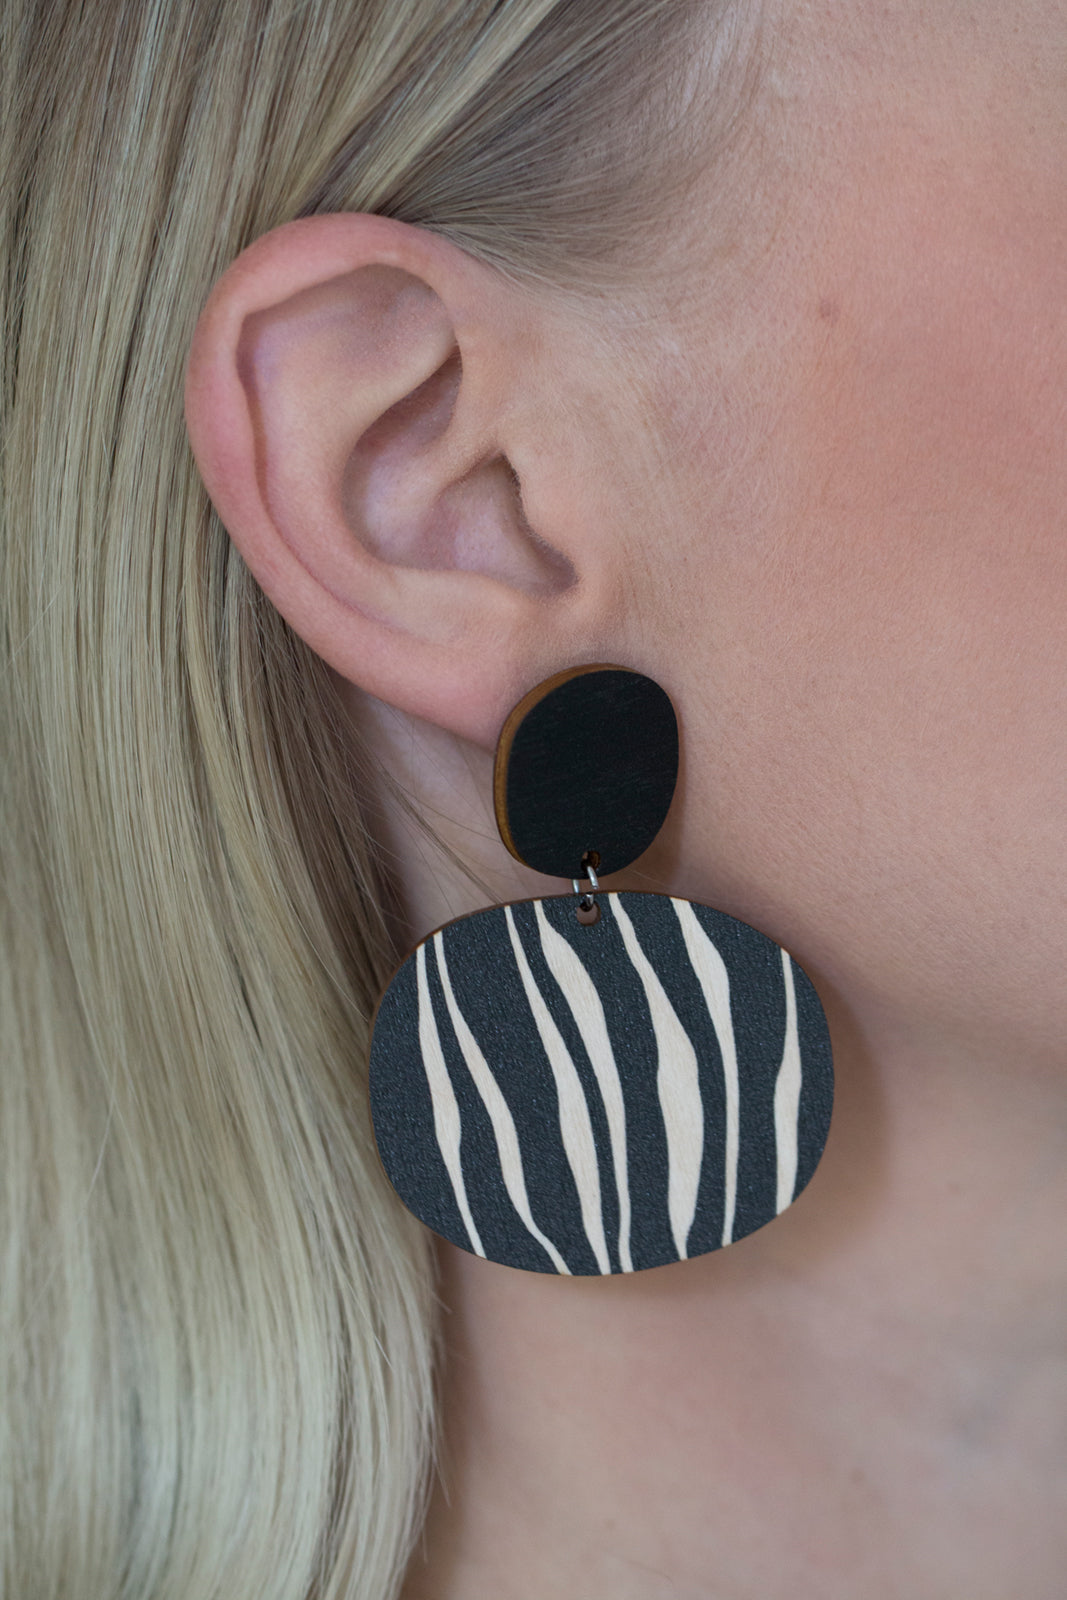 Kivi earrings in use, black and white